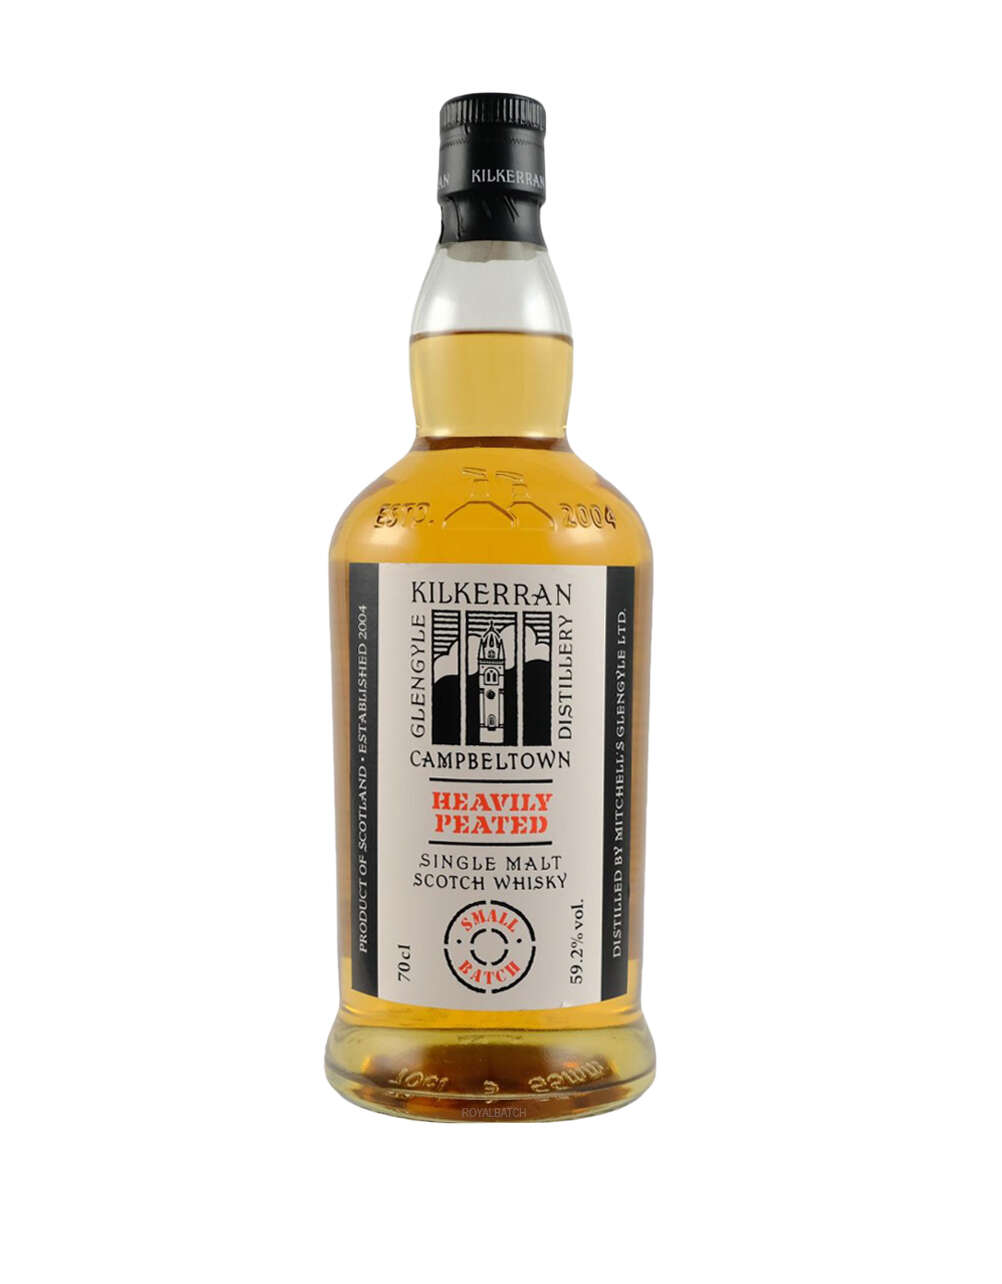 Kilkerran Campbeltown Heavily Peated Batch 8 Single Malt Scotch Whisky